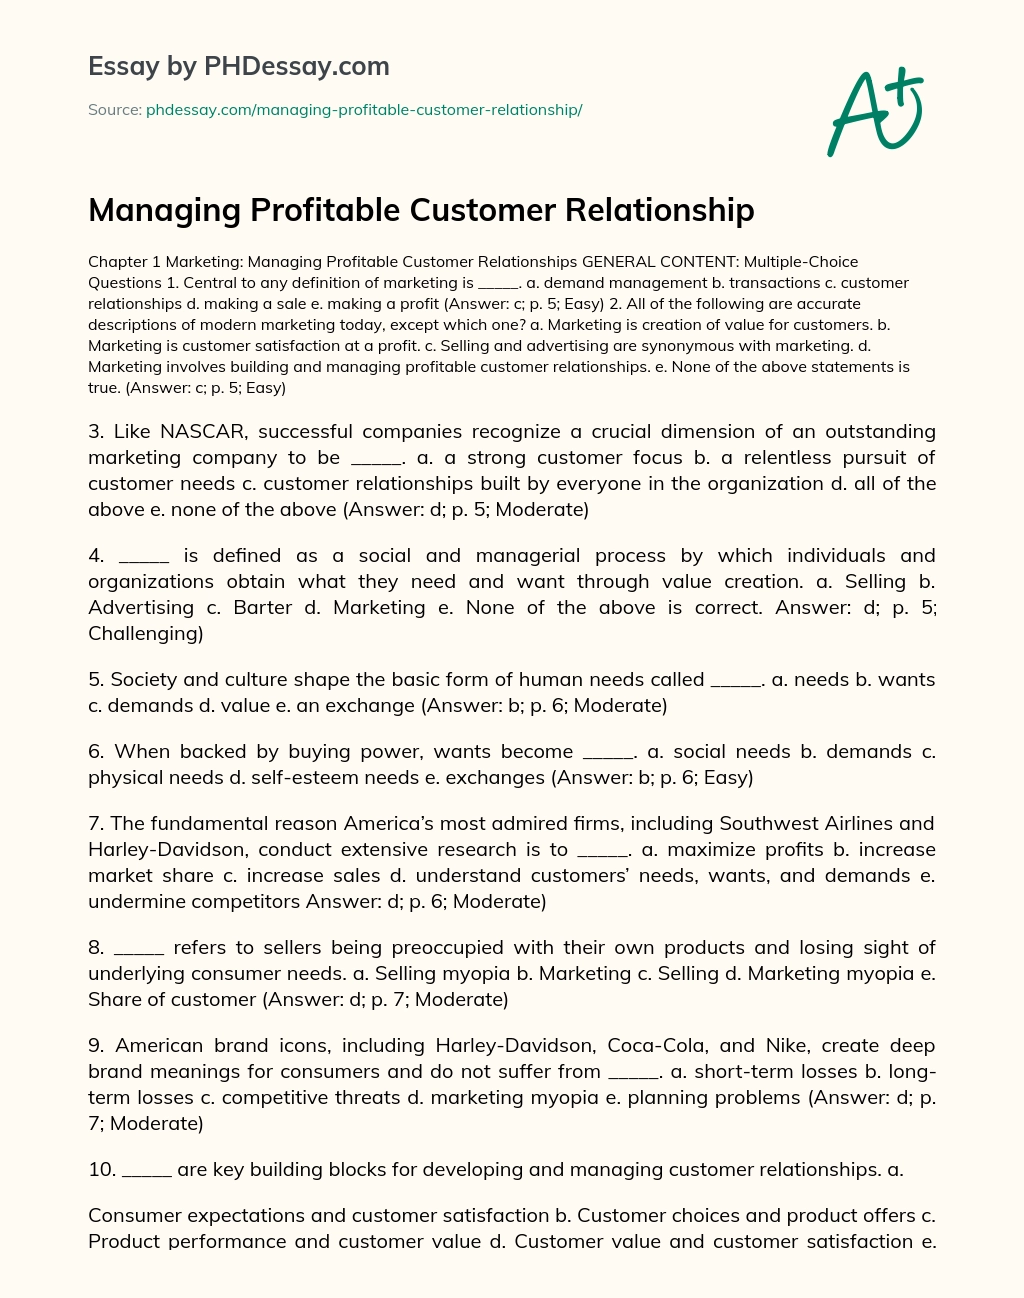 Managing Profitable Customer Relationship essay